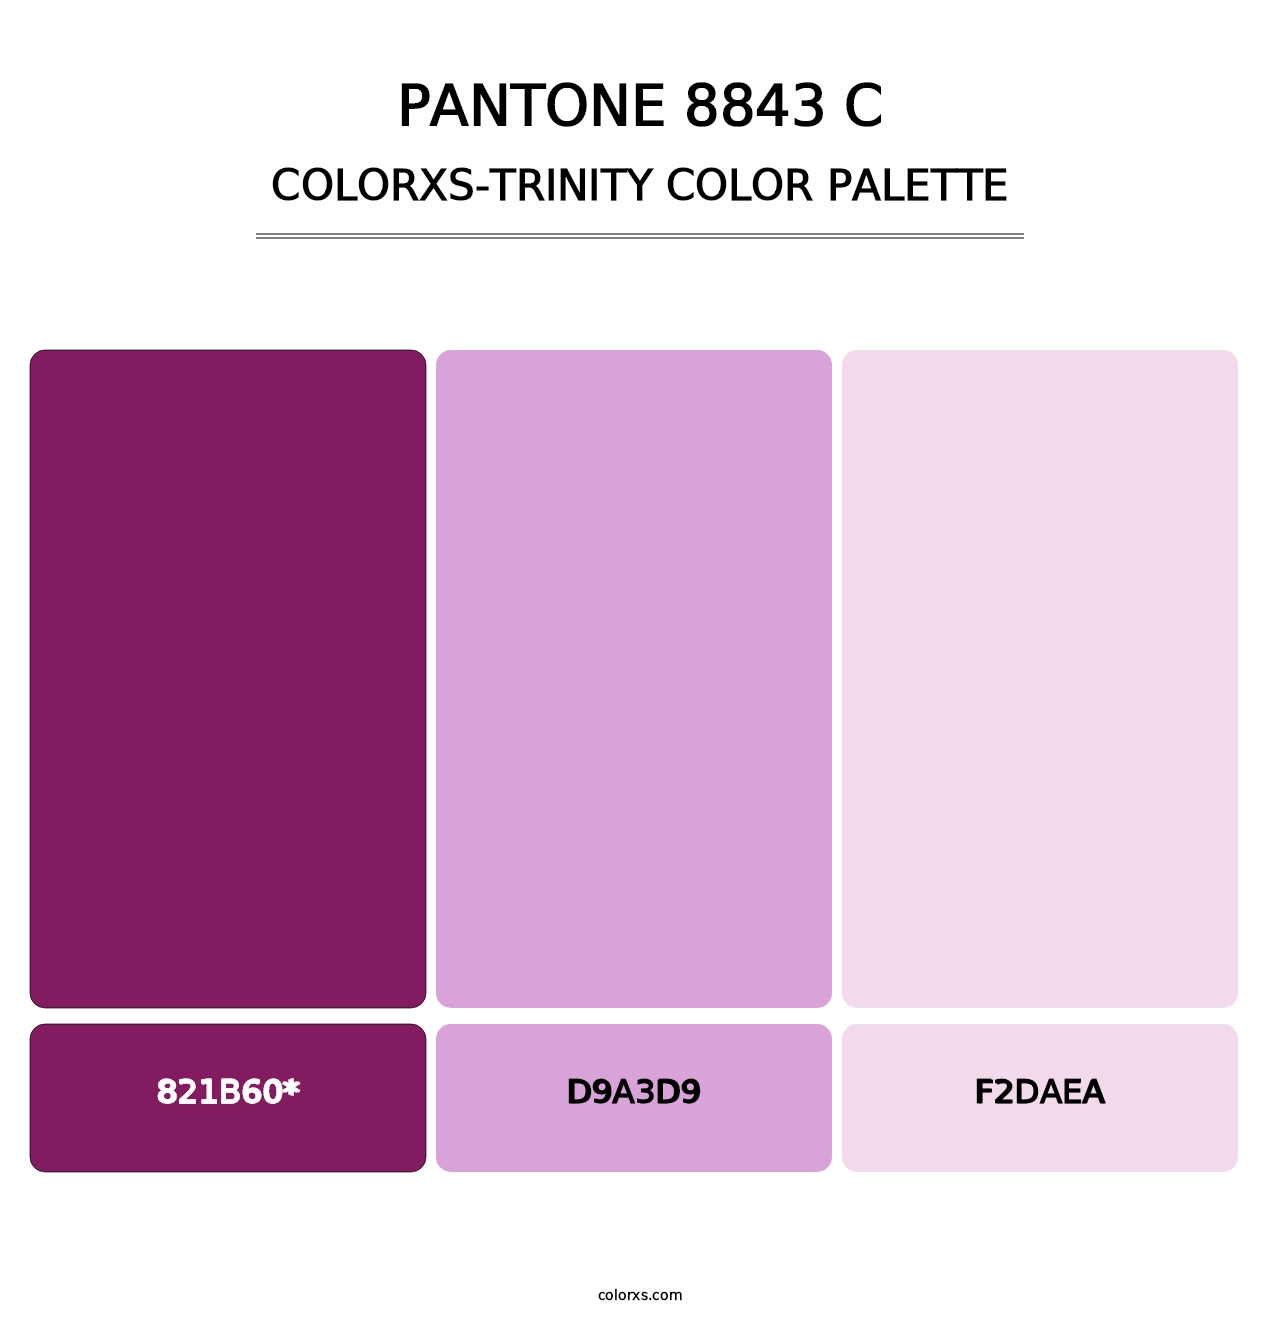 PANTONE 8843 C - Colorxs Trinity Palette